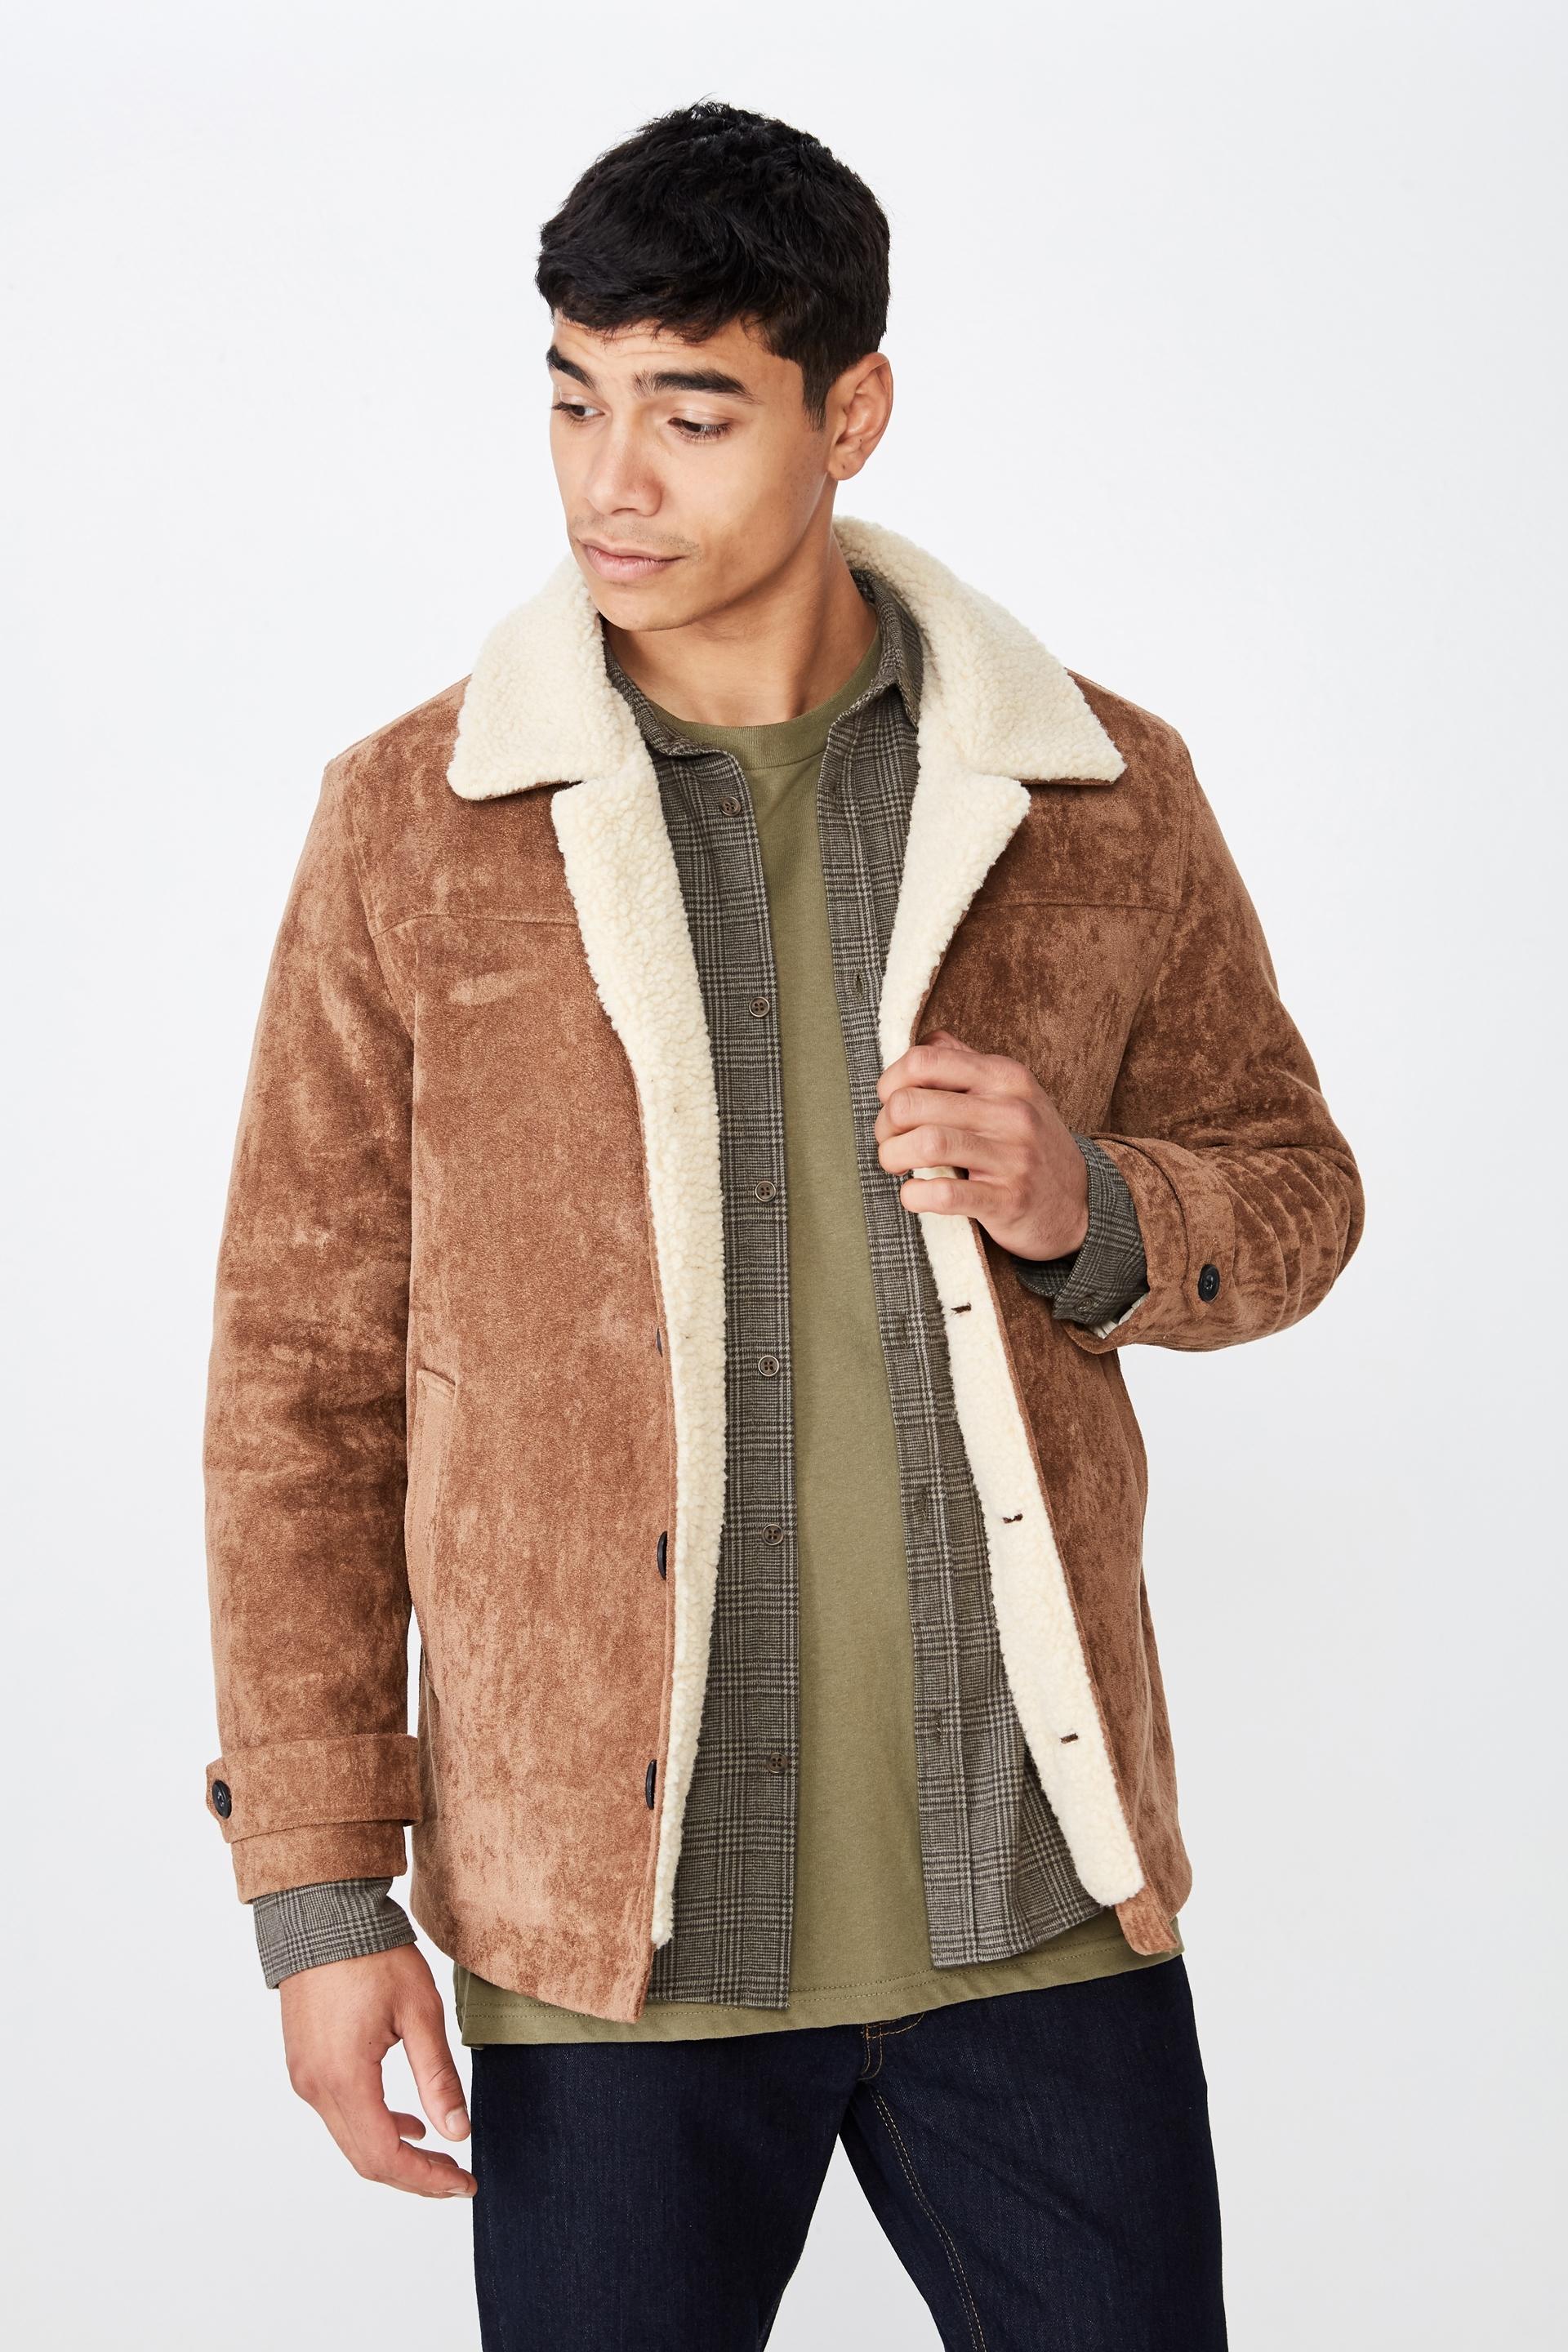 Ranch jacket - rust Cotton On Jackets | Superbalist.com